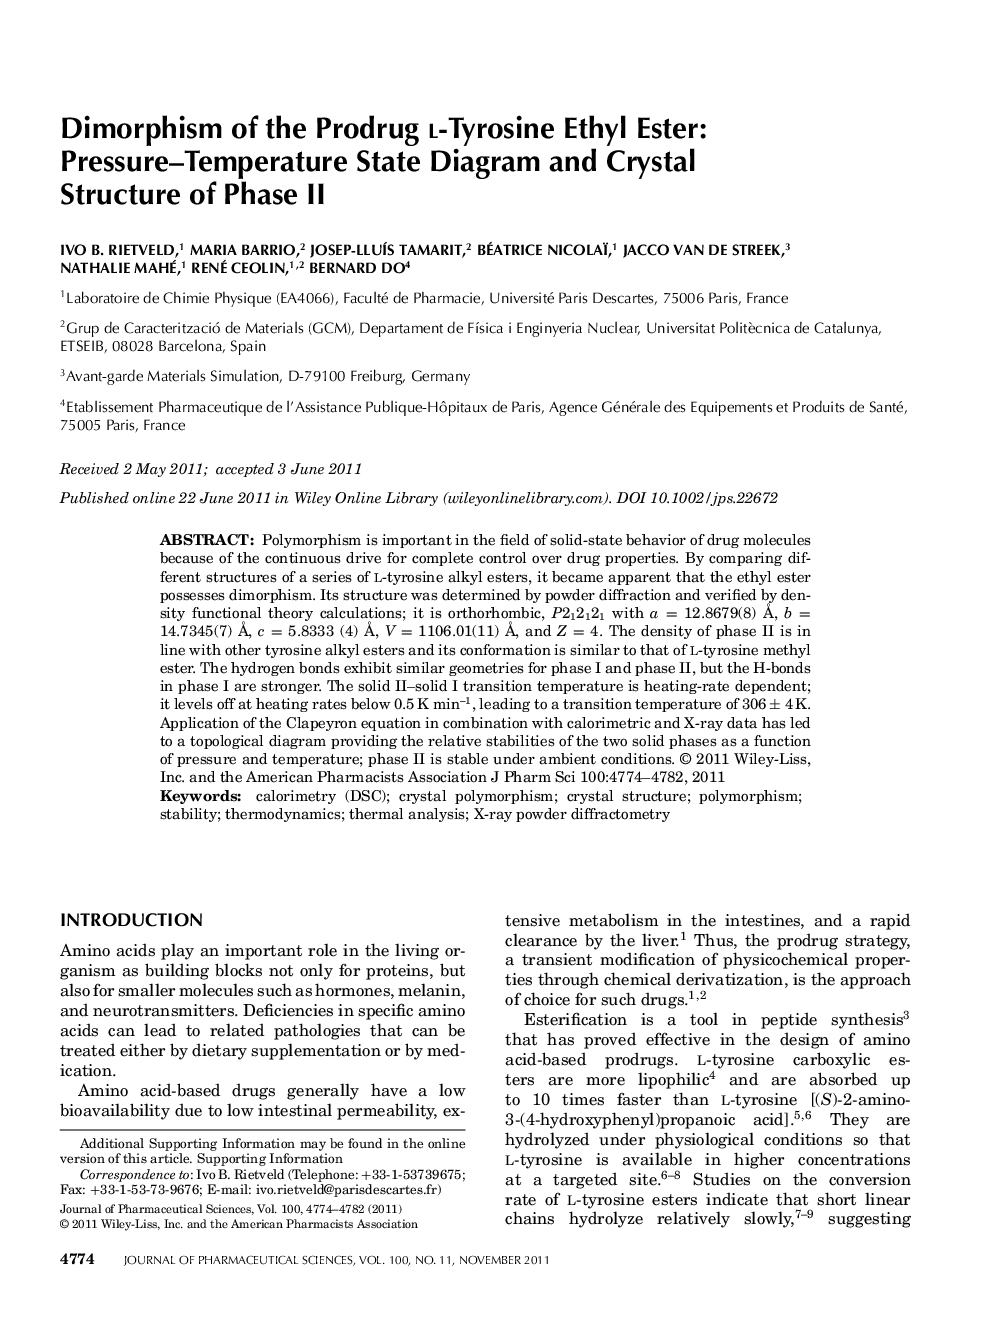 Dimorphism of the prodrug lâtyrosine ethyl ester: Pressure-temperature state diagram and crystal structure of phase II